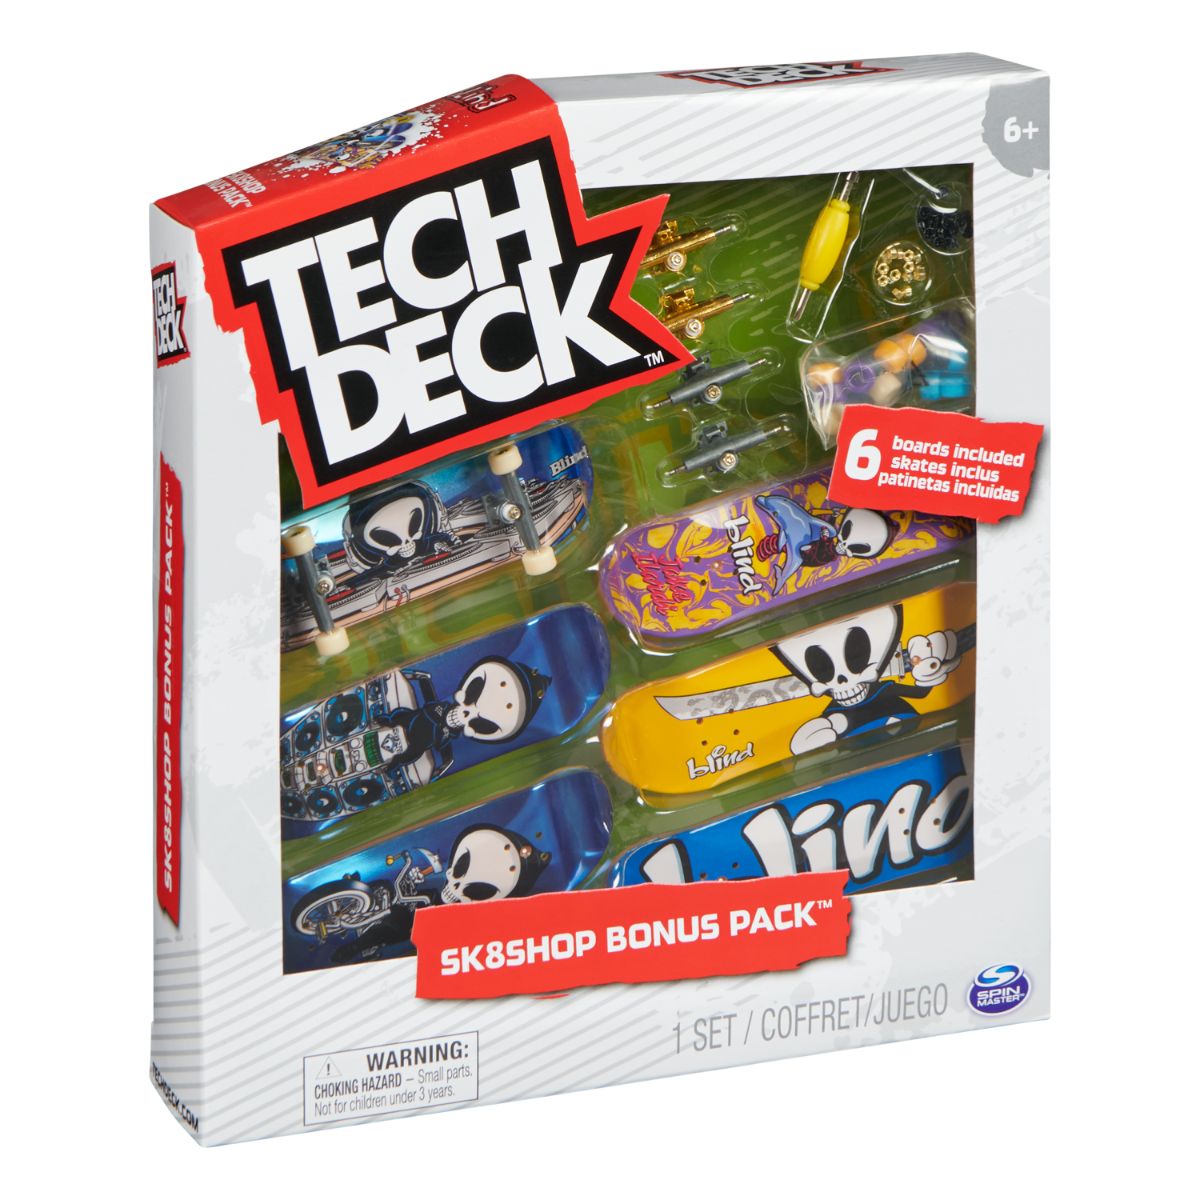 Set 6 mini placi skateboard, Tech Deck, Bonus Pack 20136703 Masinute 2023-09-21